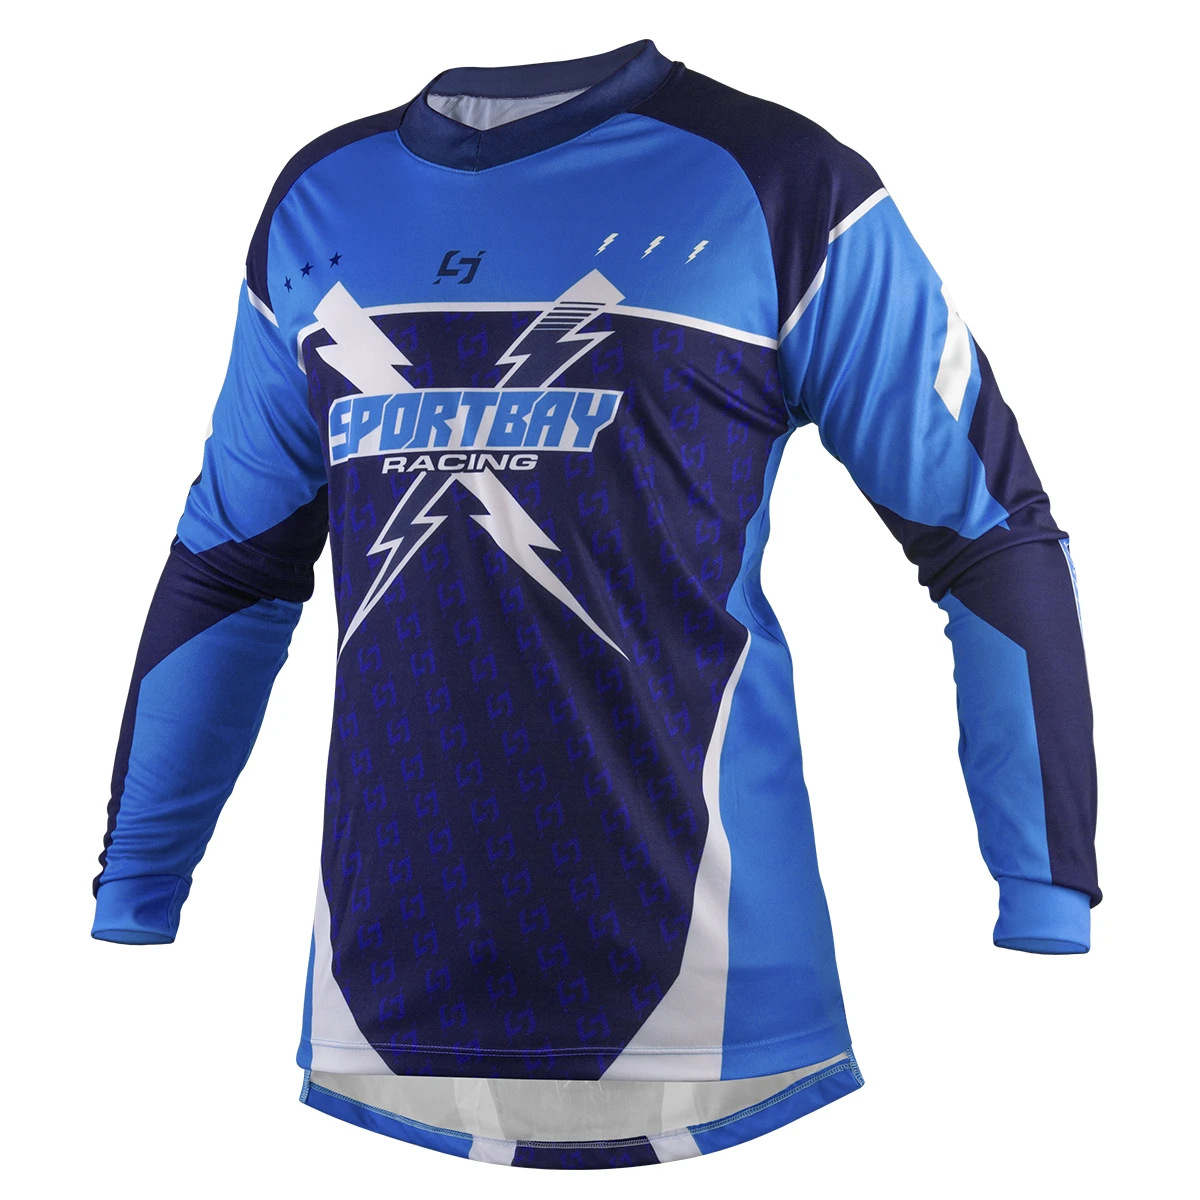 Camisa Motocross Sportbay Racing X